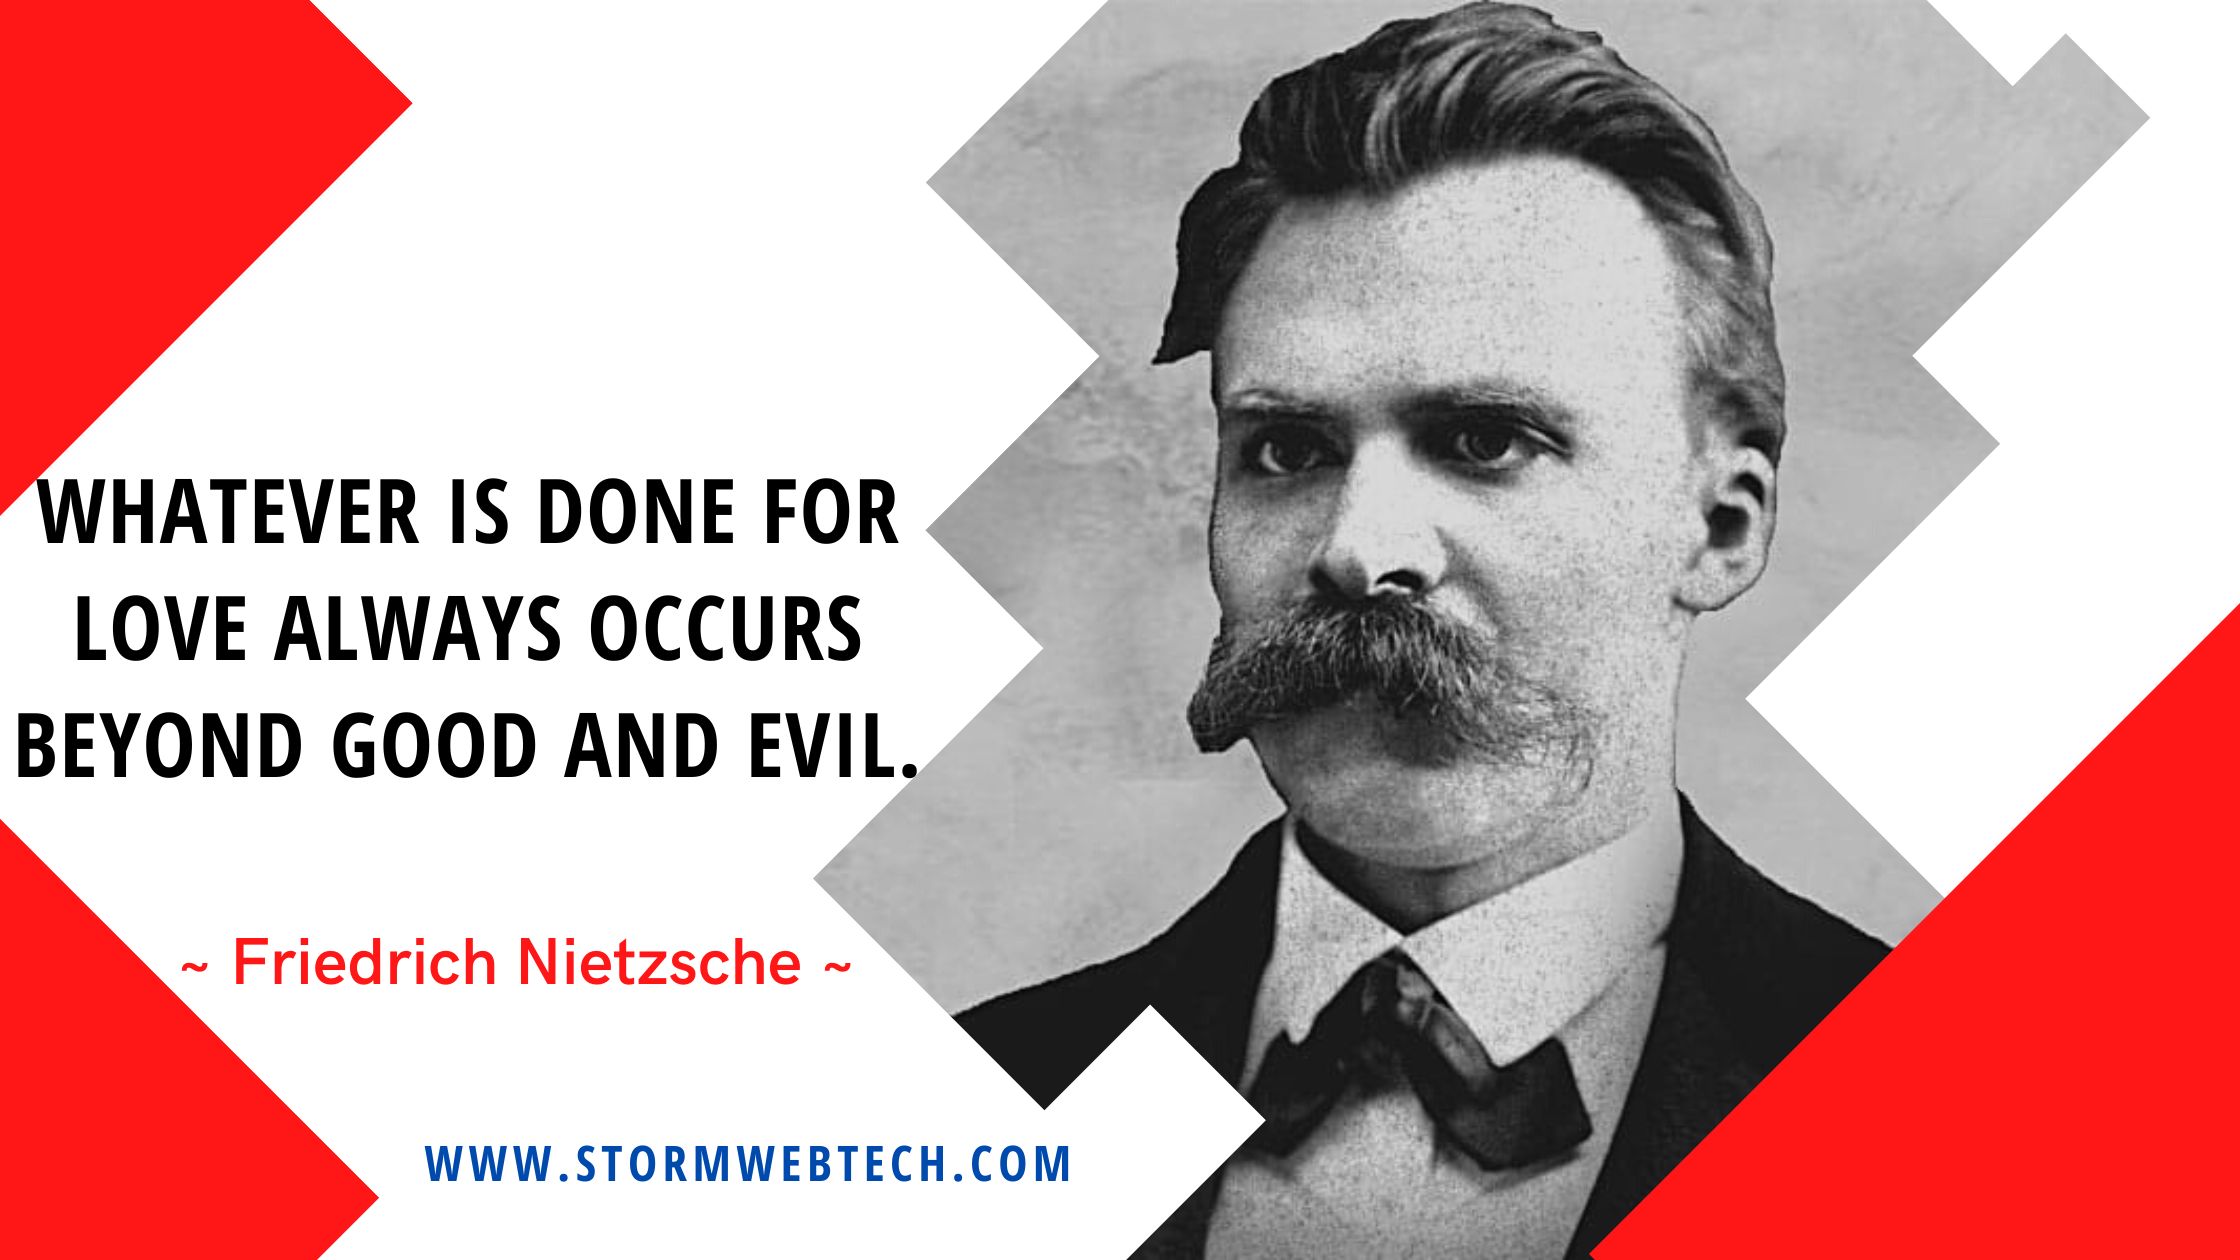 Friedrich Nietzsche Quotes About Life, Friedrich Nietzsche Quotes About Love, Quotes Of Friedrich Nietzsche, Quotes By Friedrich Nietzsche